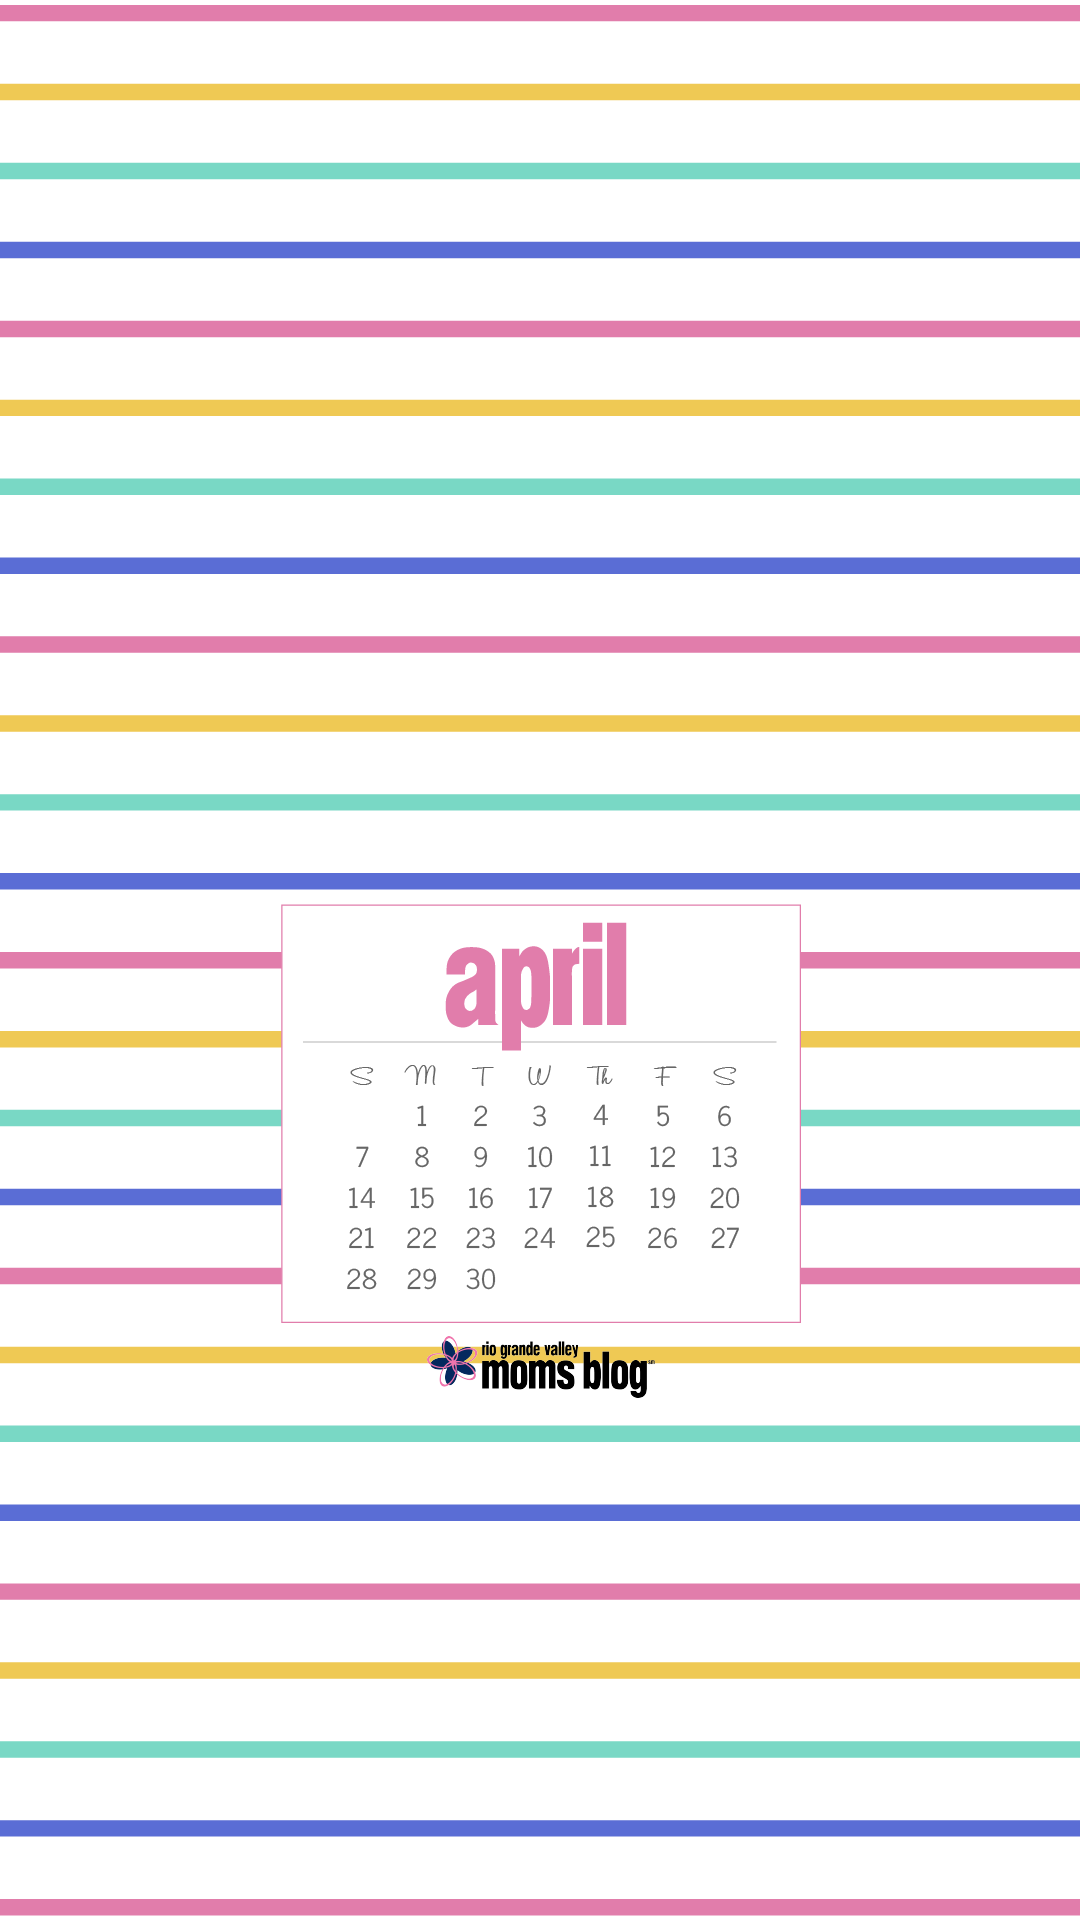 April 2019 - Calendar - Stripes